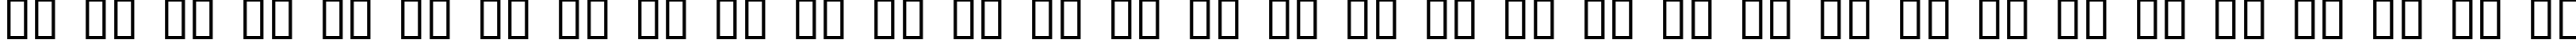 Пример написания русского алфавита шрифтом Aunchanted Xspace Bold